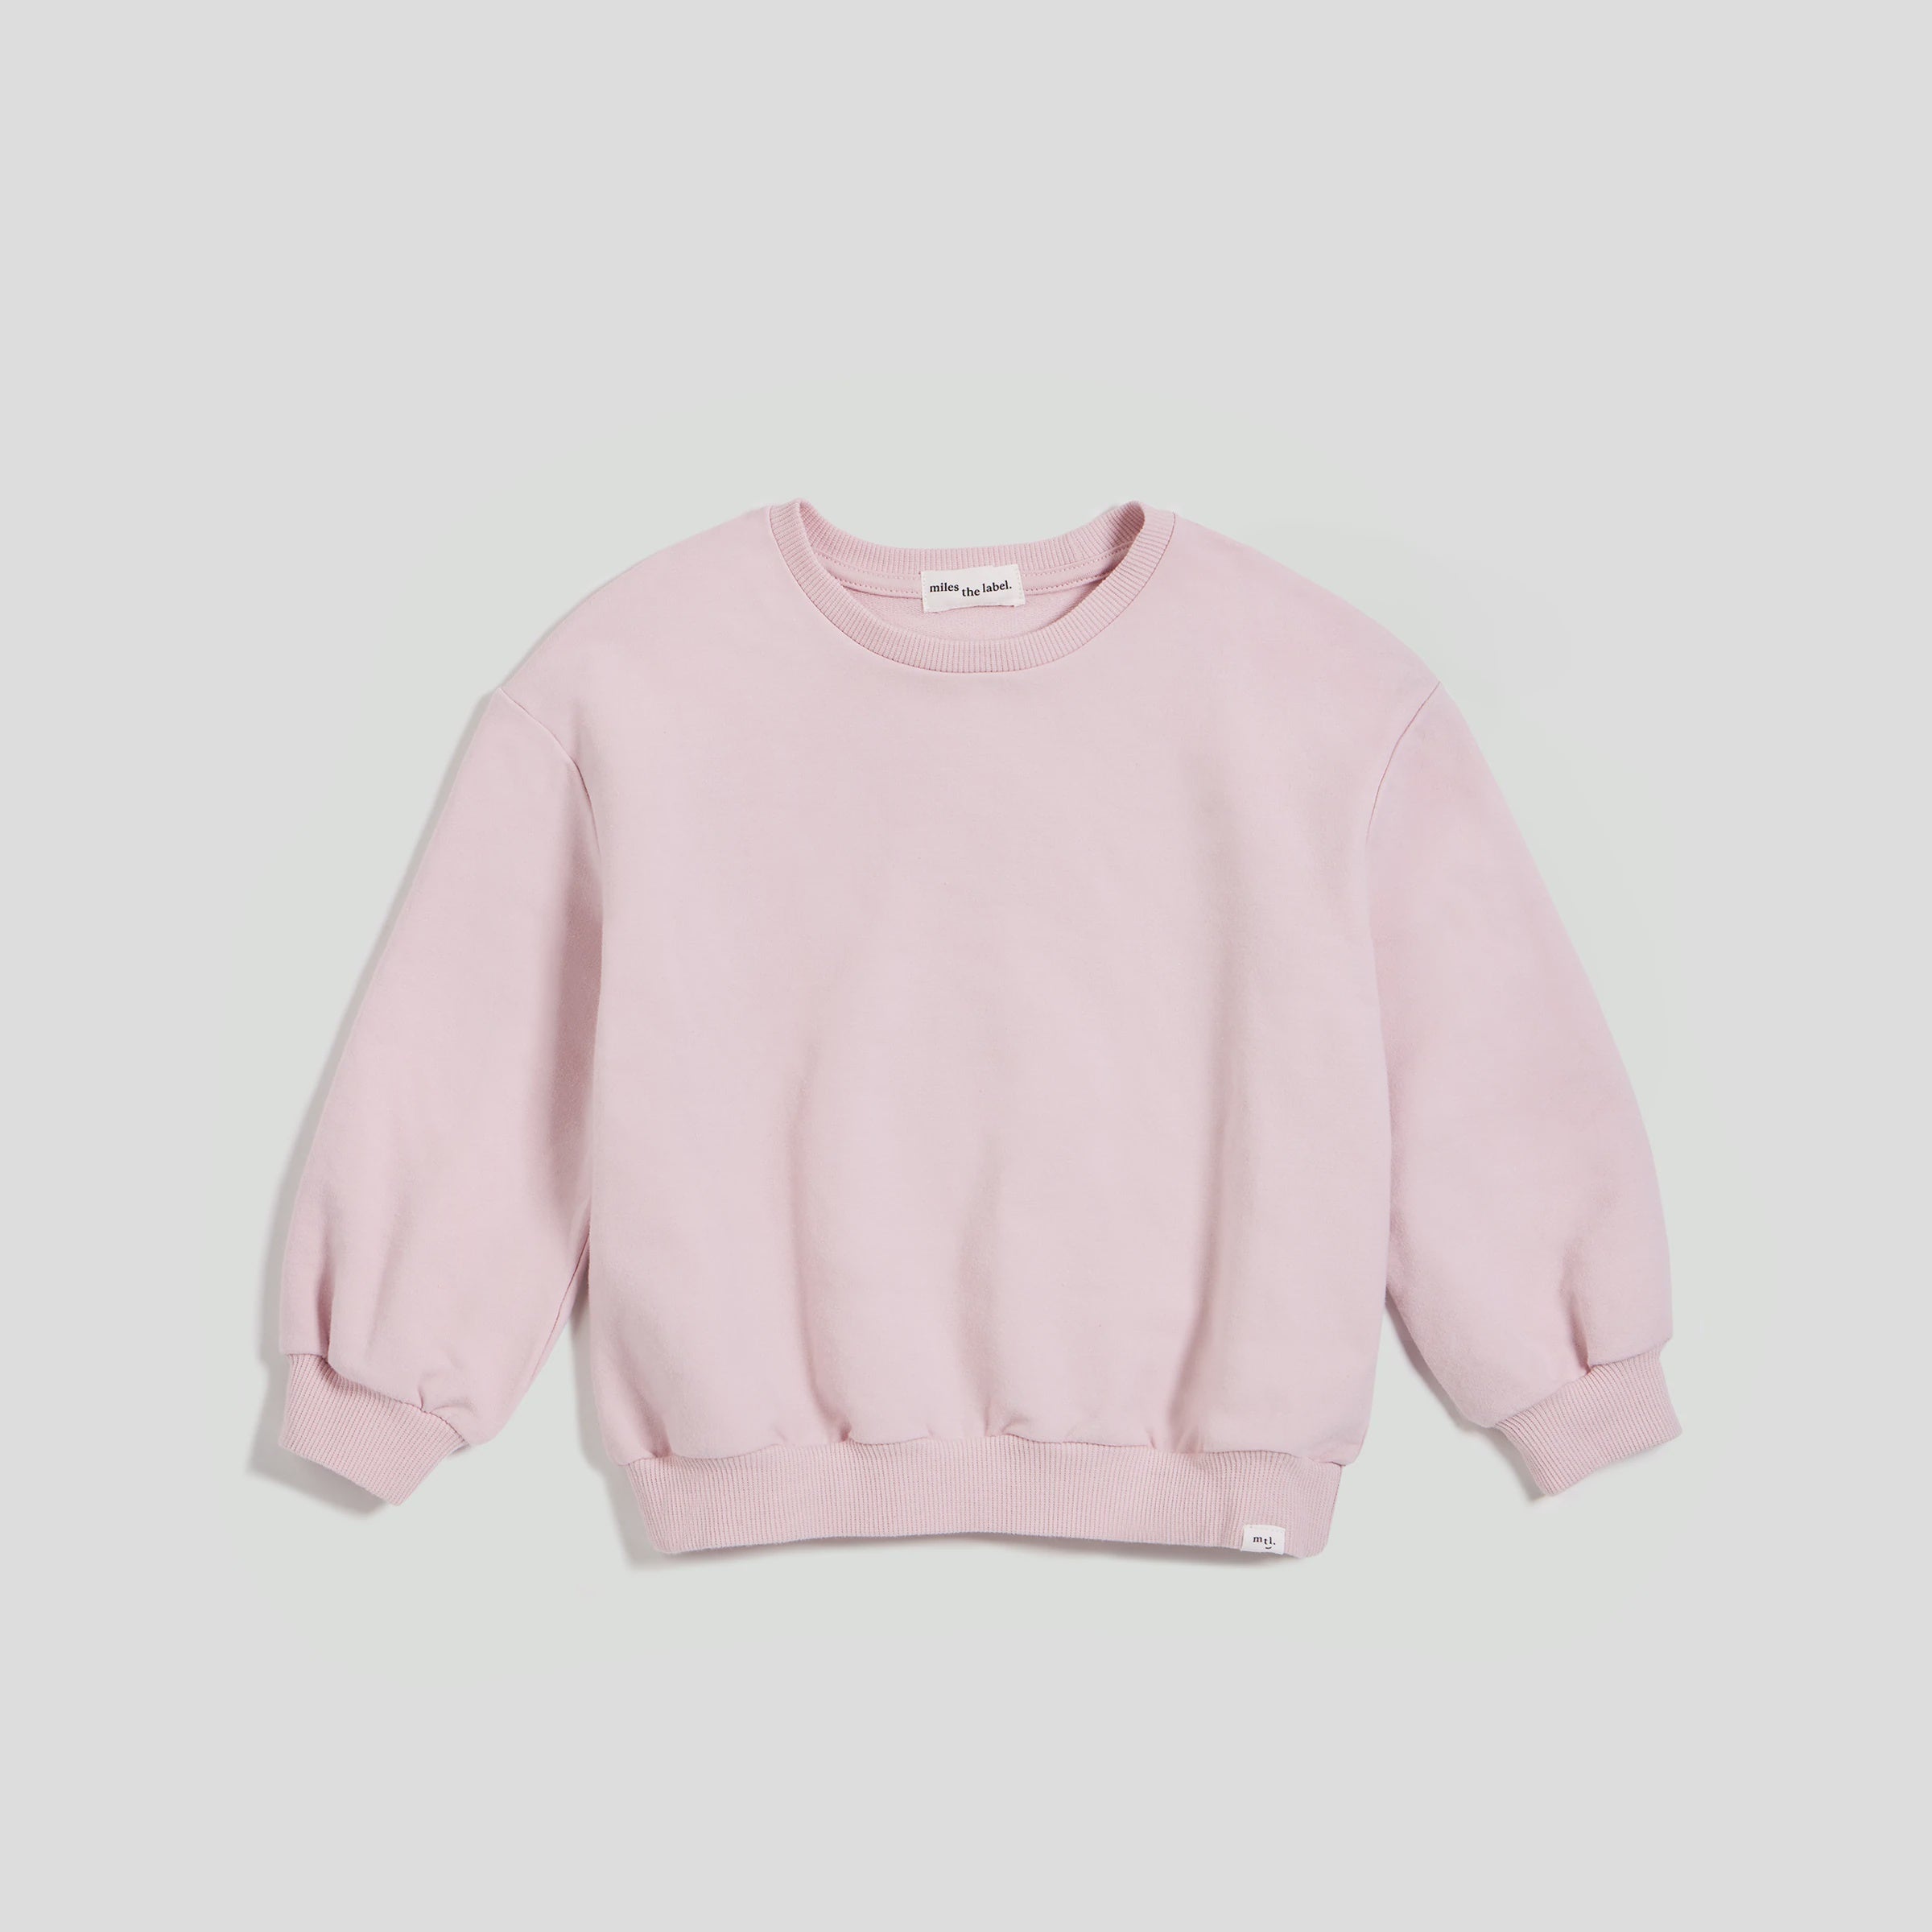 Cloudy Pink Sweatrshirt